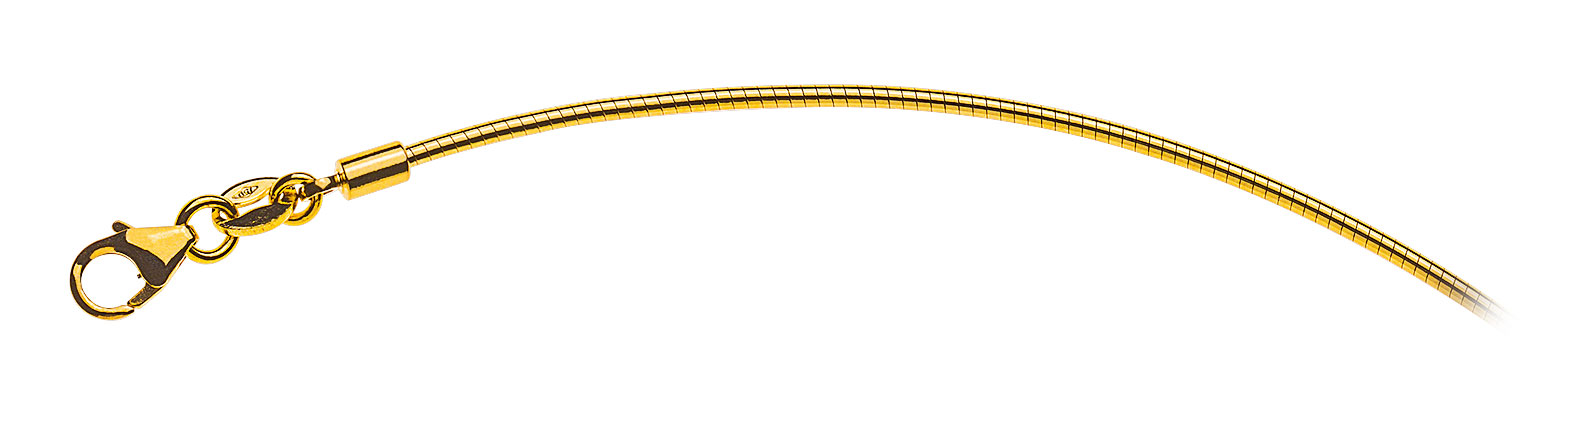 AURONOS Prestige Necklace yellow gold 18K omega chain 42cm 1.4mm